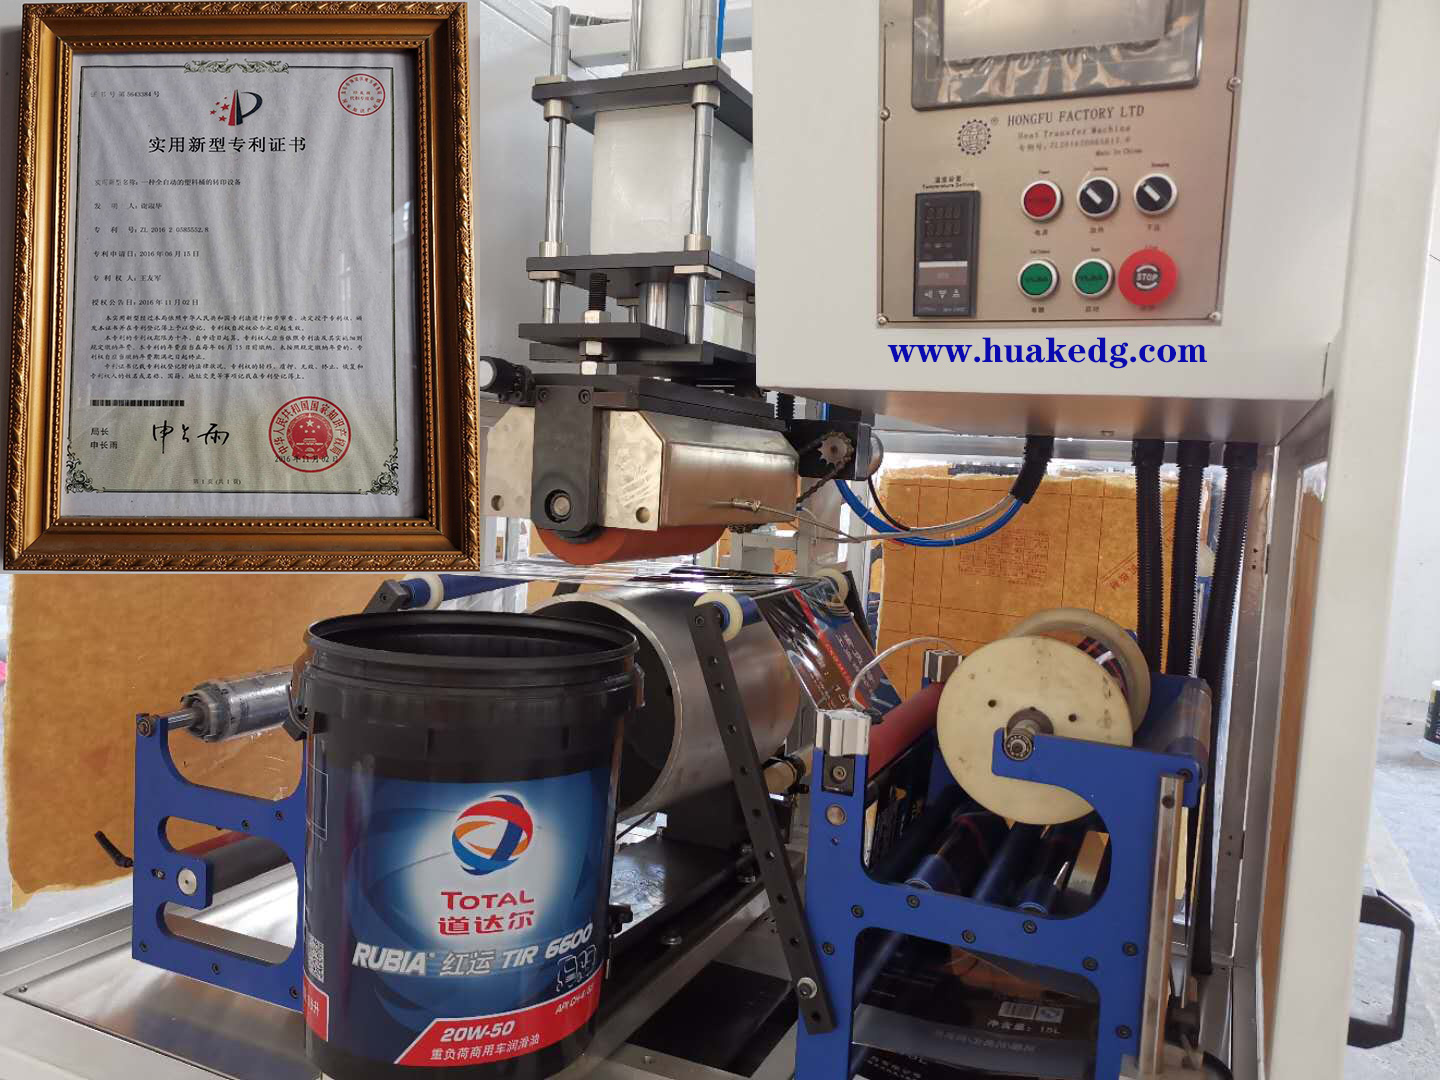 Heat Transfer Machine For Buckets